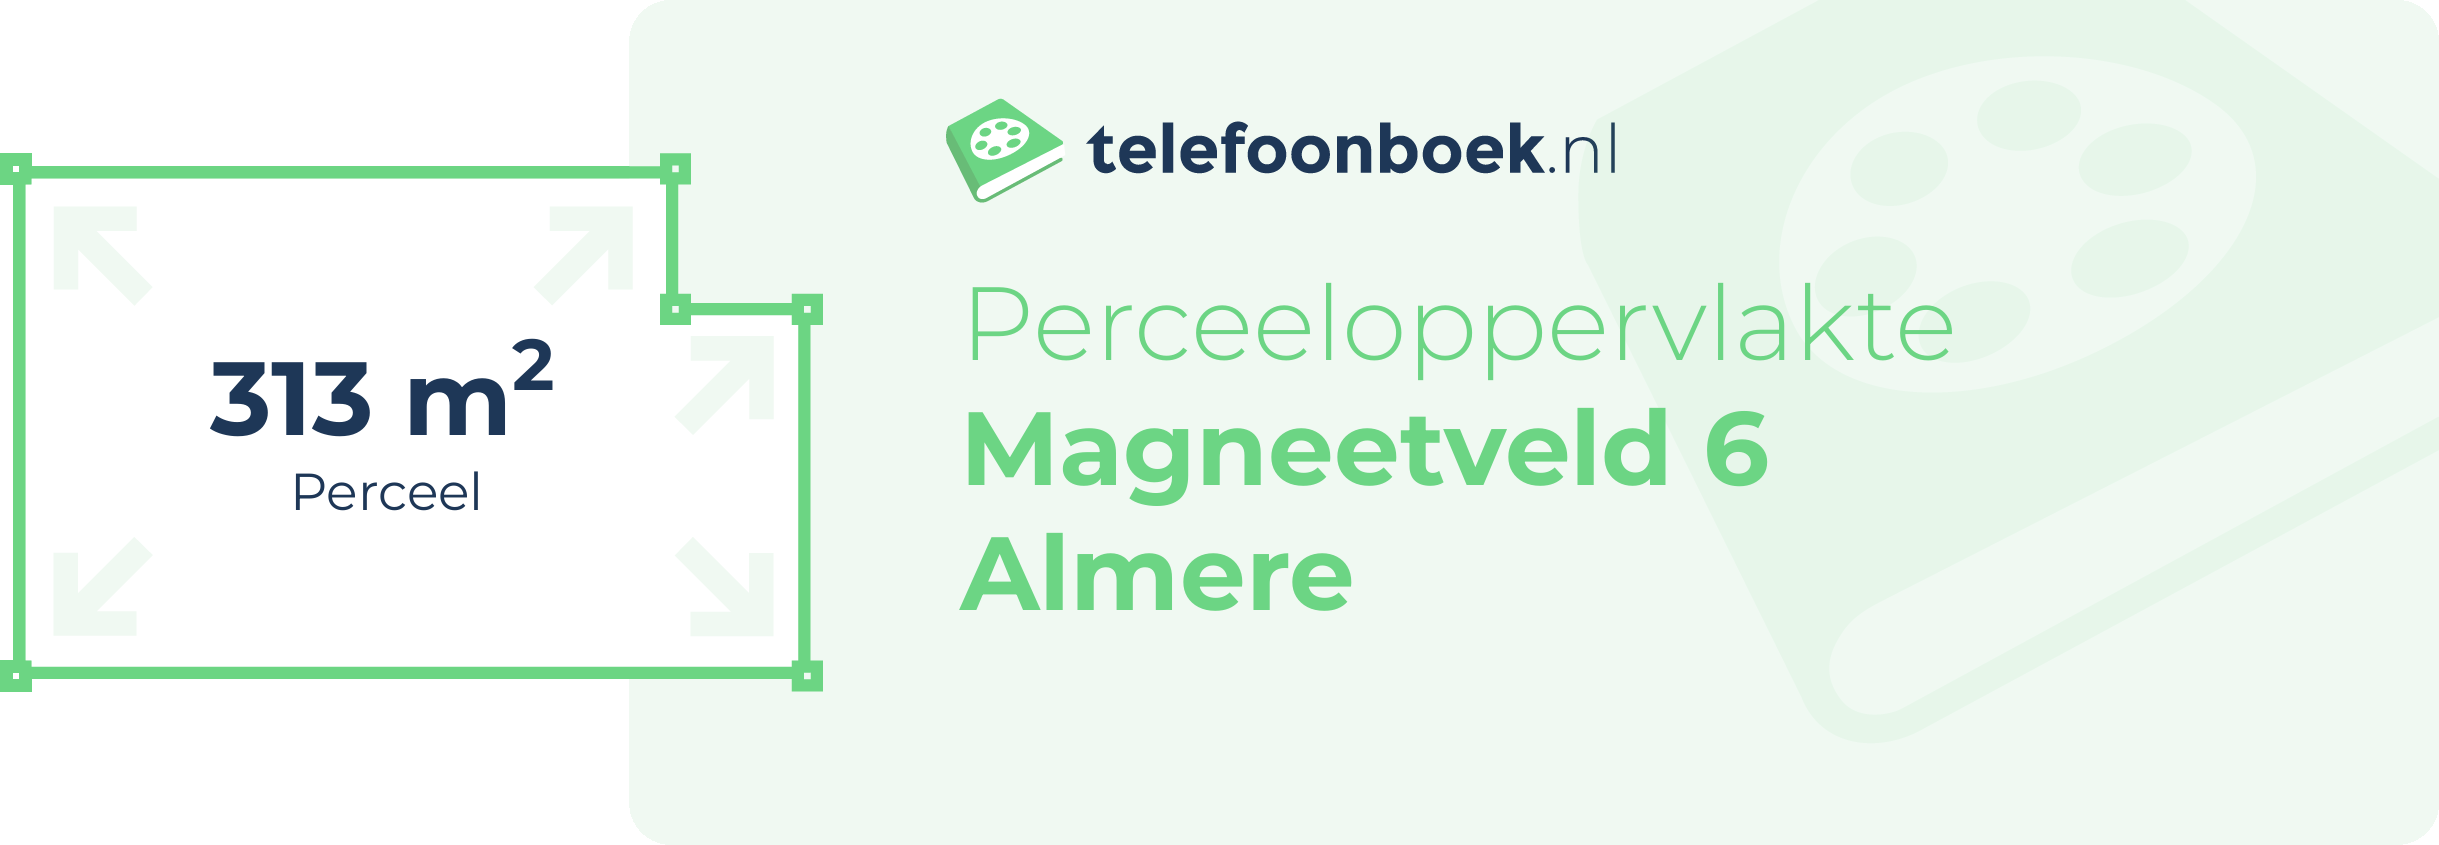 Perceeloppervlakte Magneetveld 6 Almere